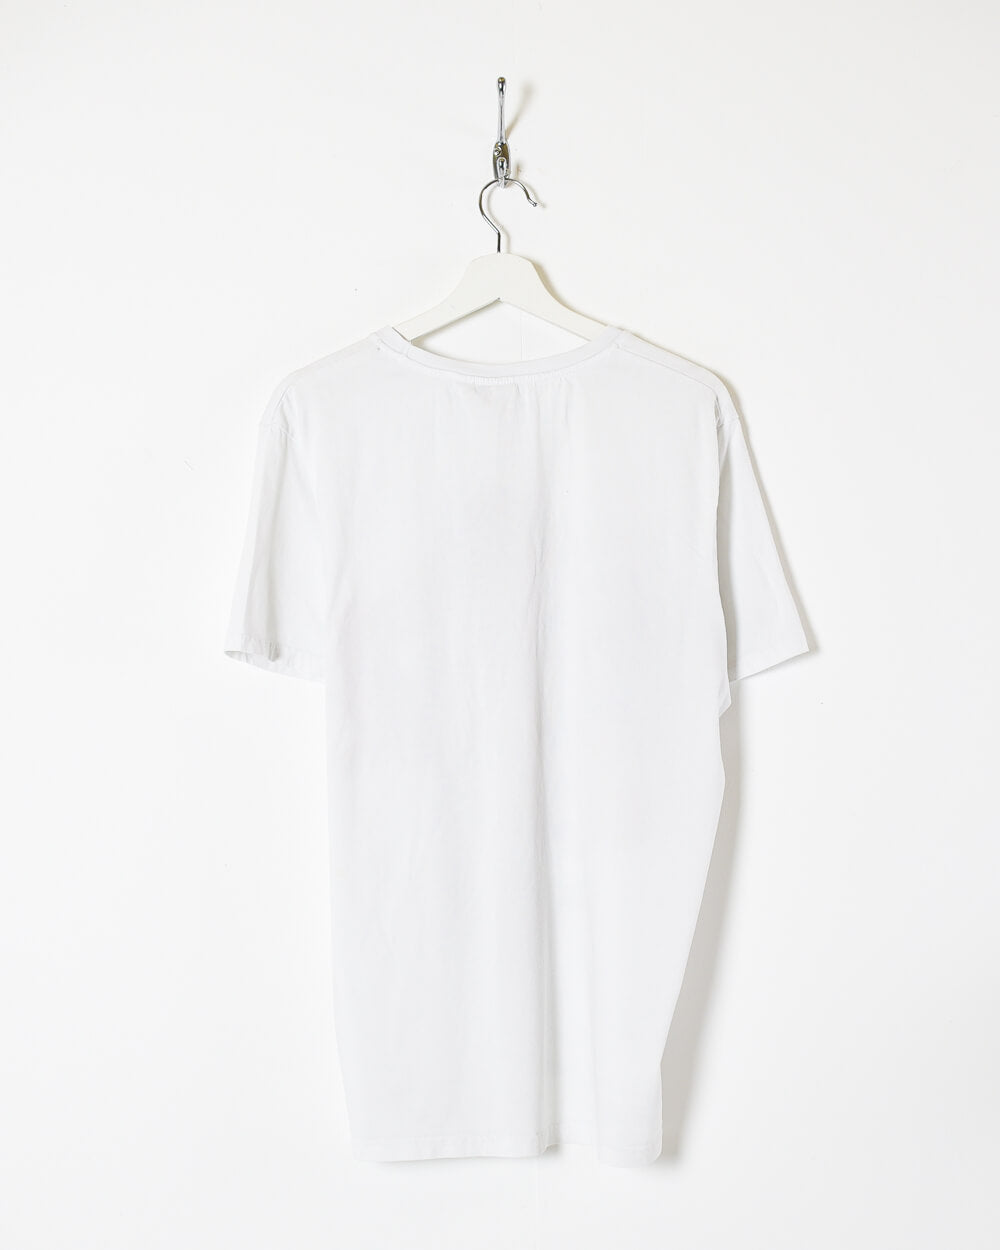 White Space Jam T-Shirt - Large